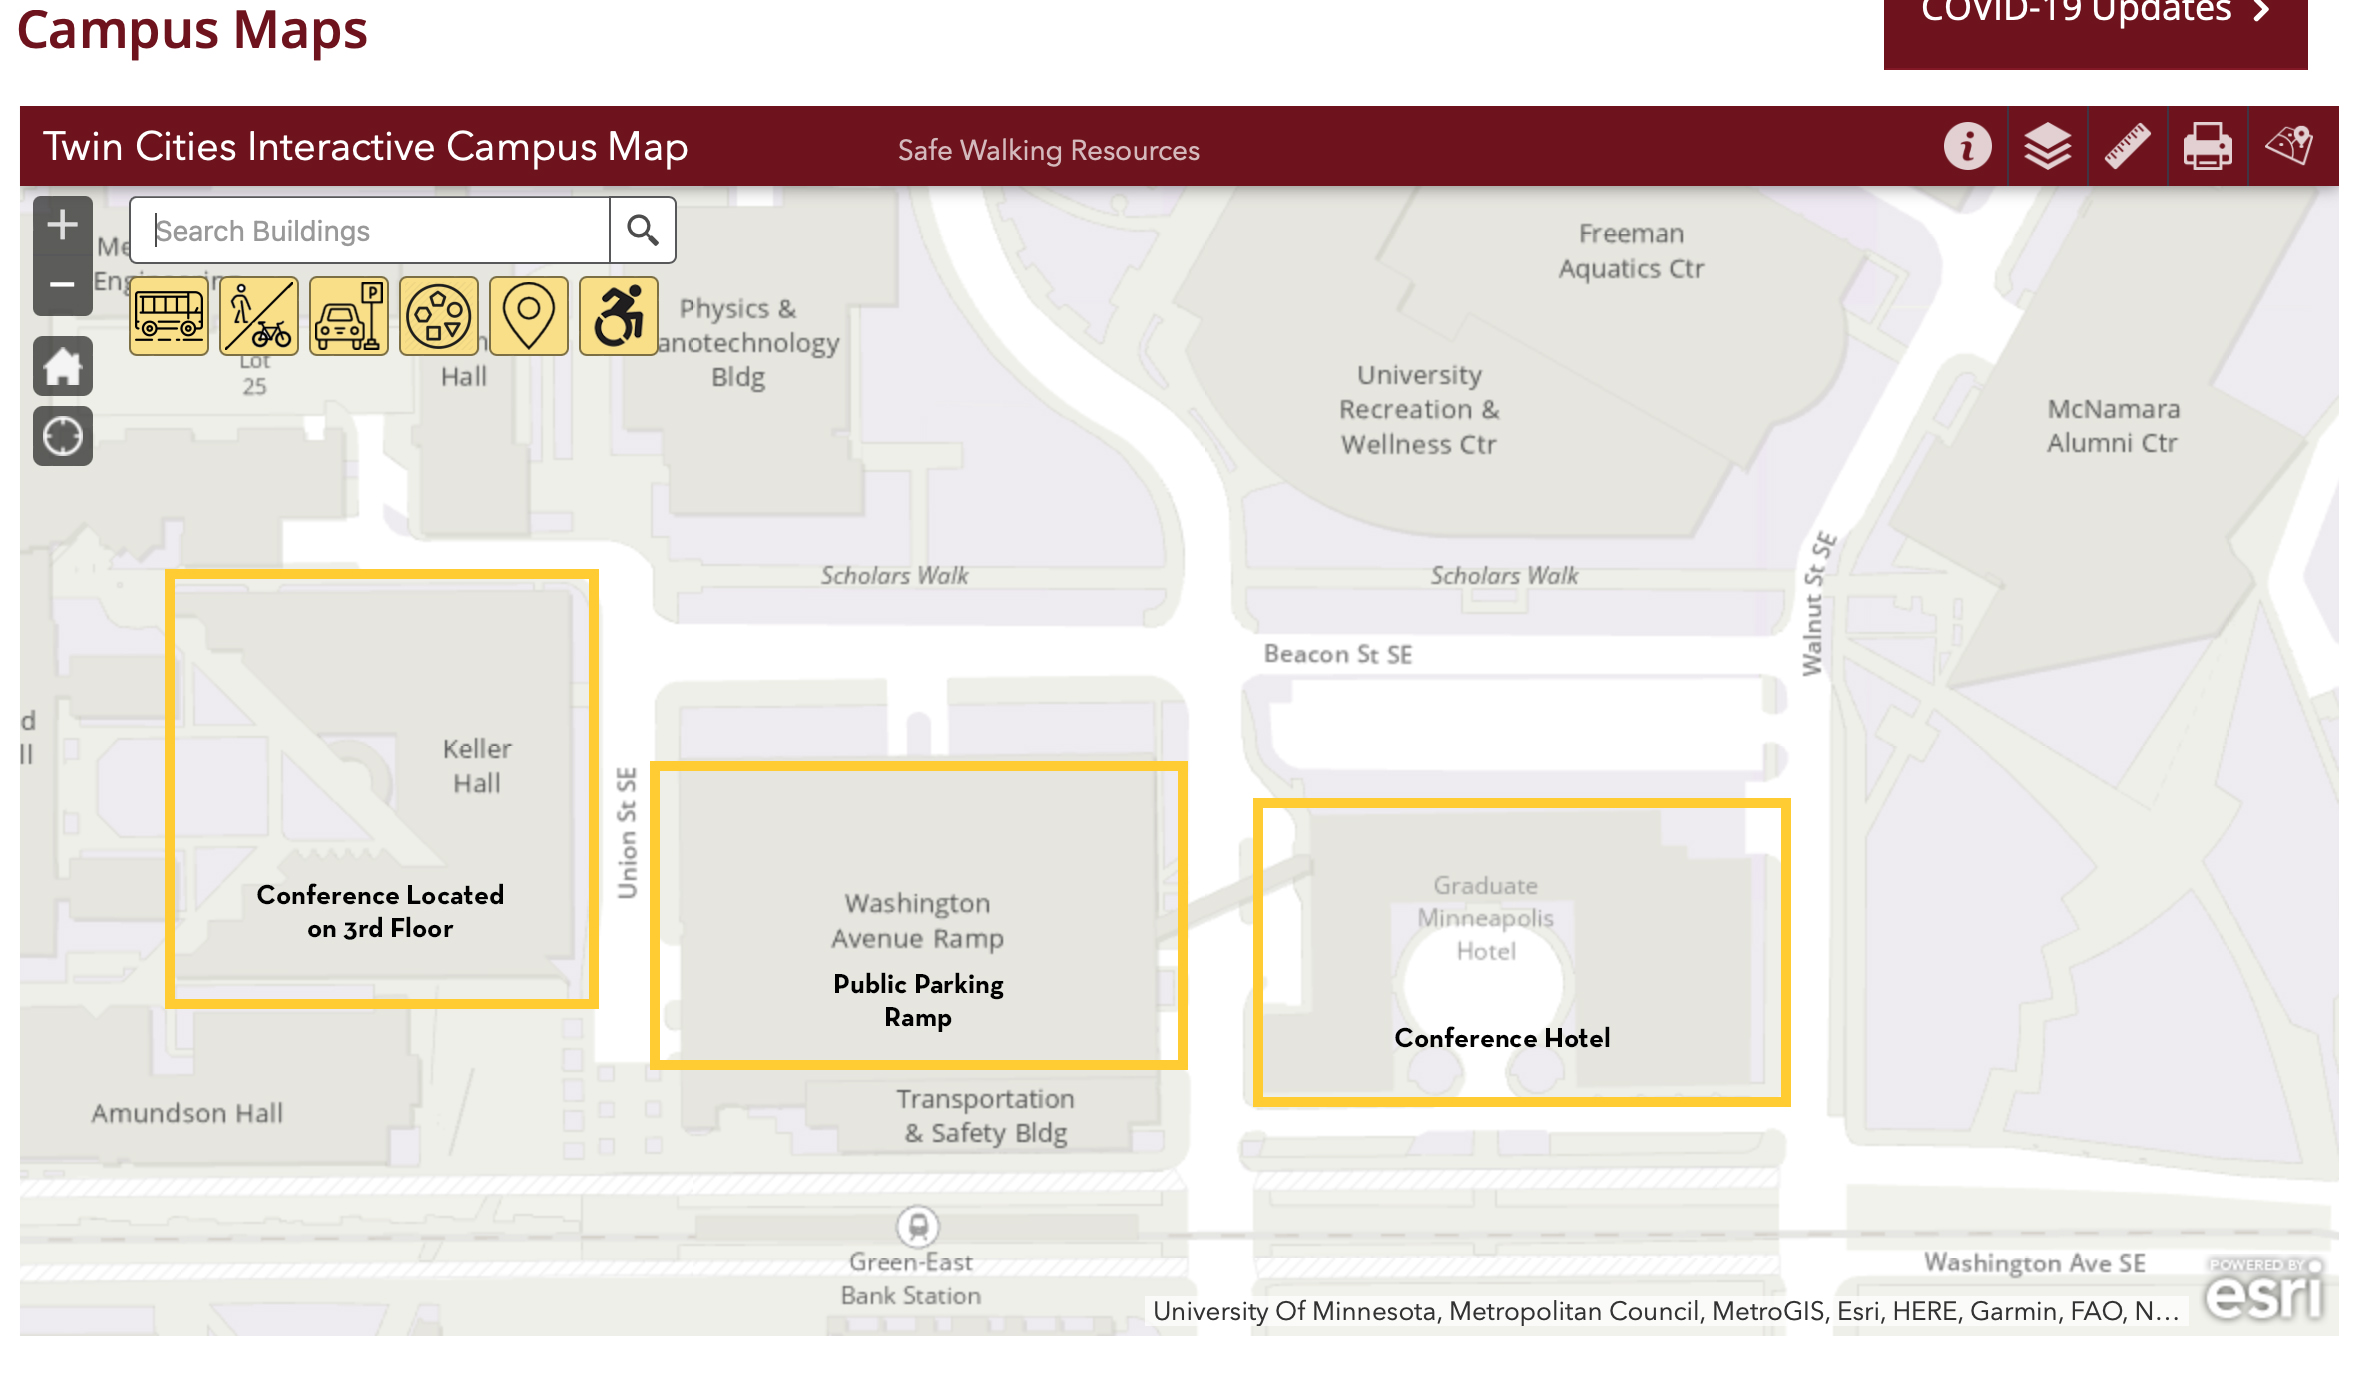 Campus map highlighting Keller Hall, Washington Avenue Ramp and the Graduate Hotel. 